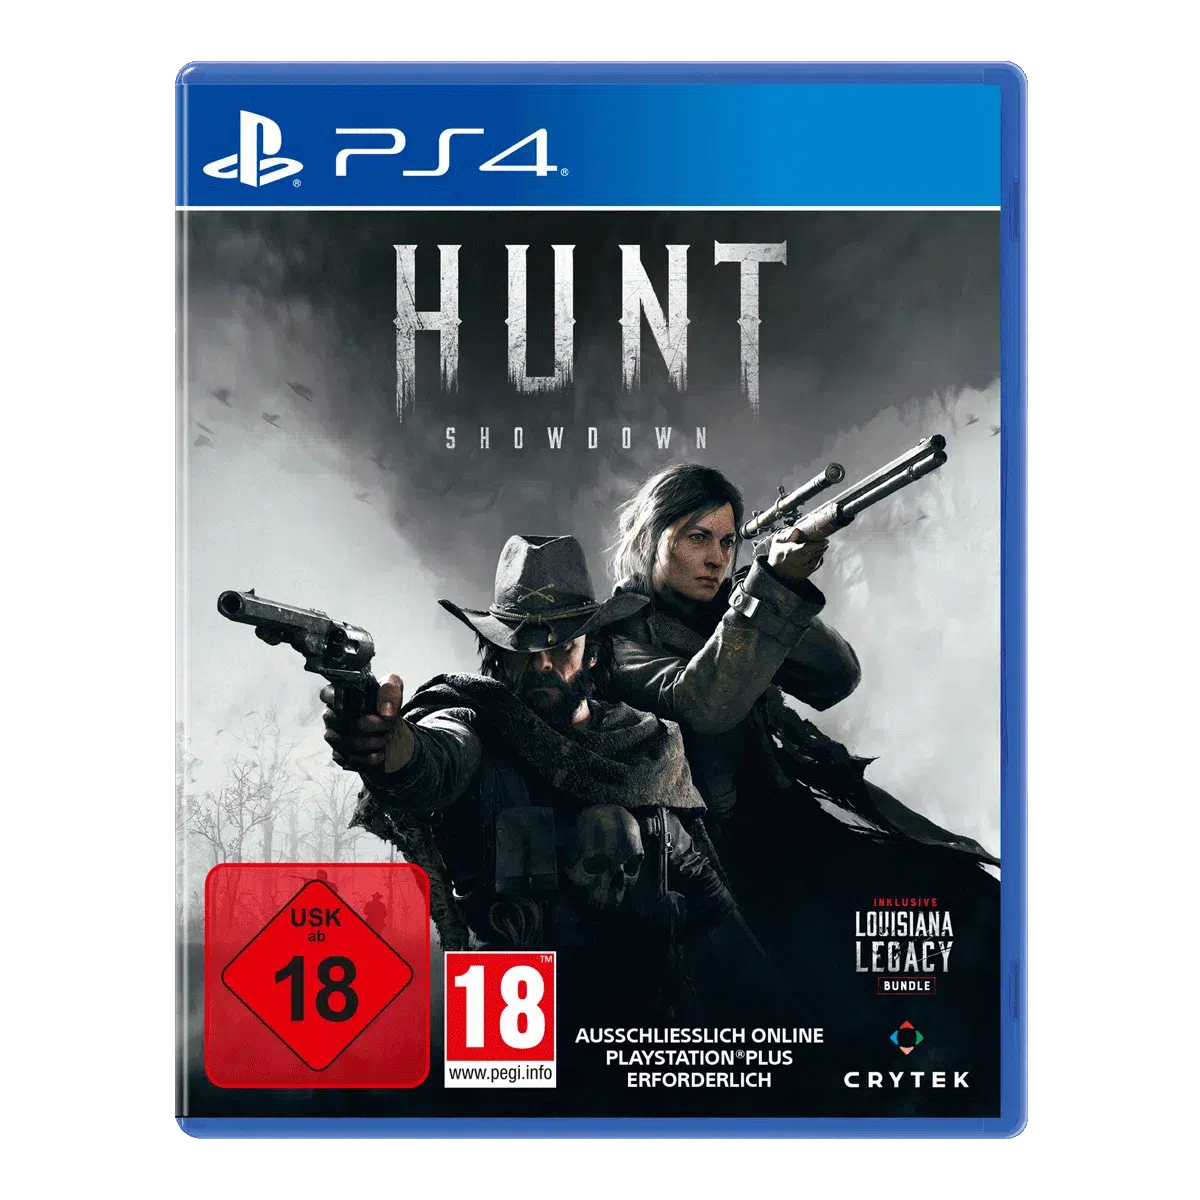 Hunt: Showdown - PS4